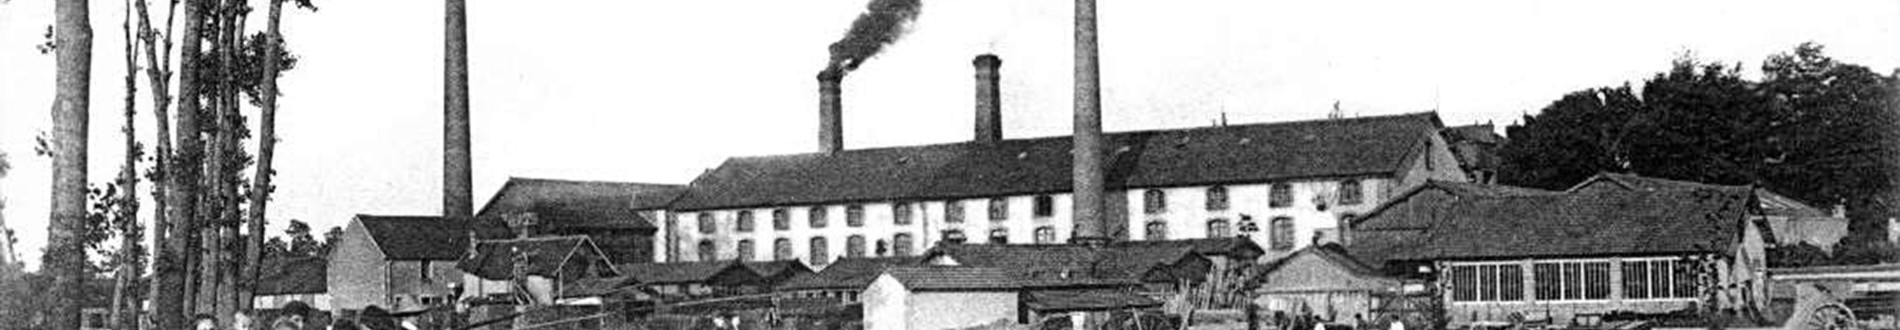 Histoire de l'usine Sauvard